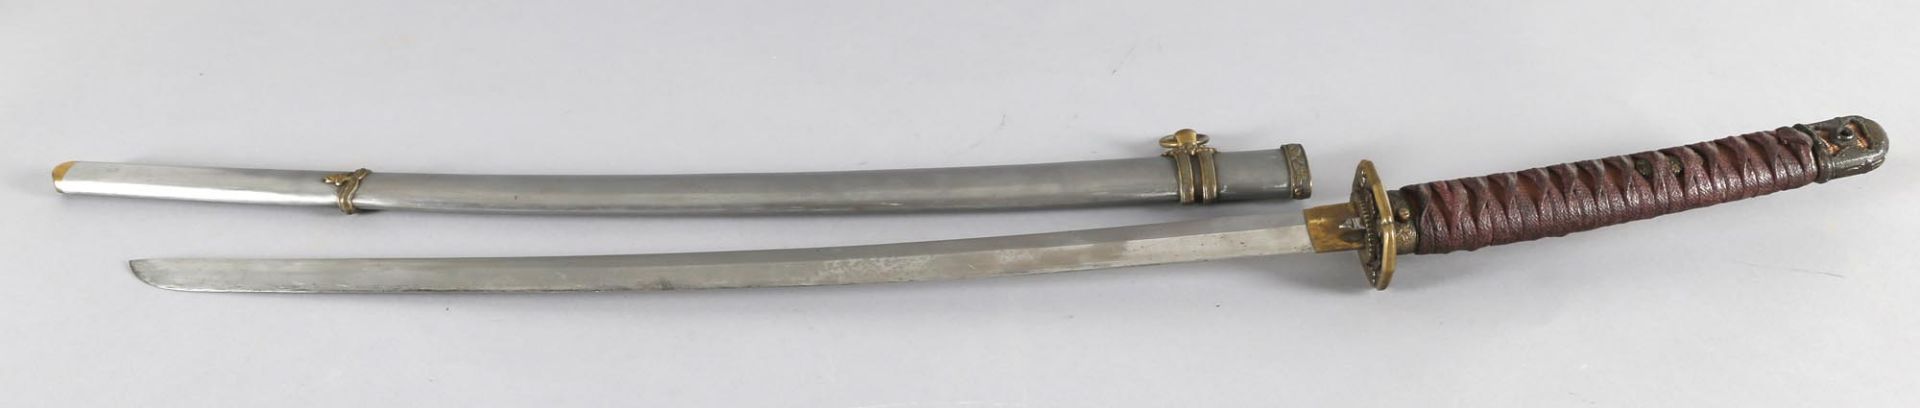 Katana Schwert, Japan, Anfang 20. Jh.leicht geschwungene einschneidige Klinge, Griff mit roten